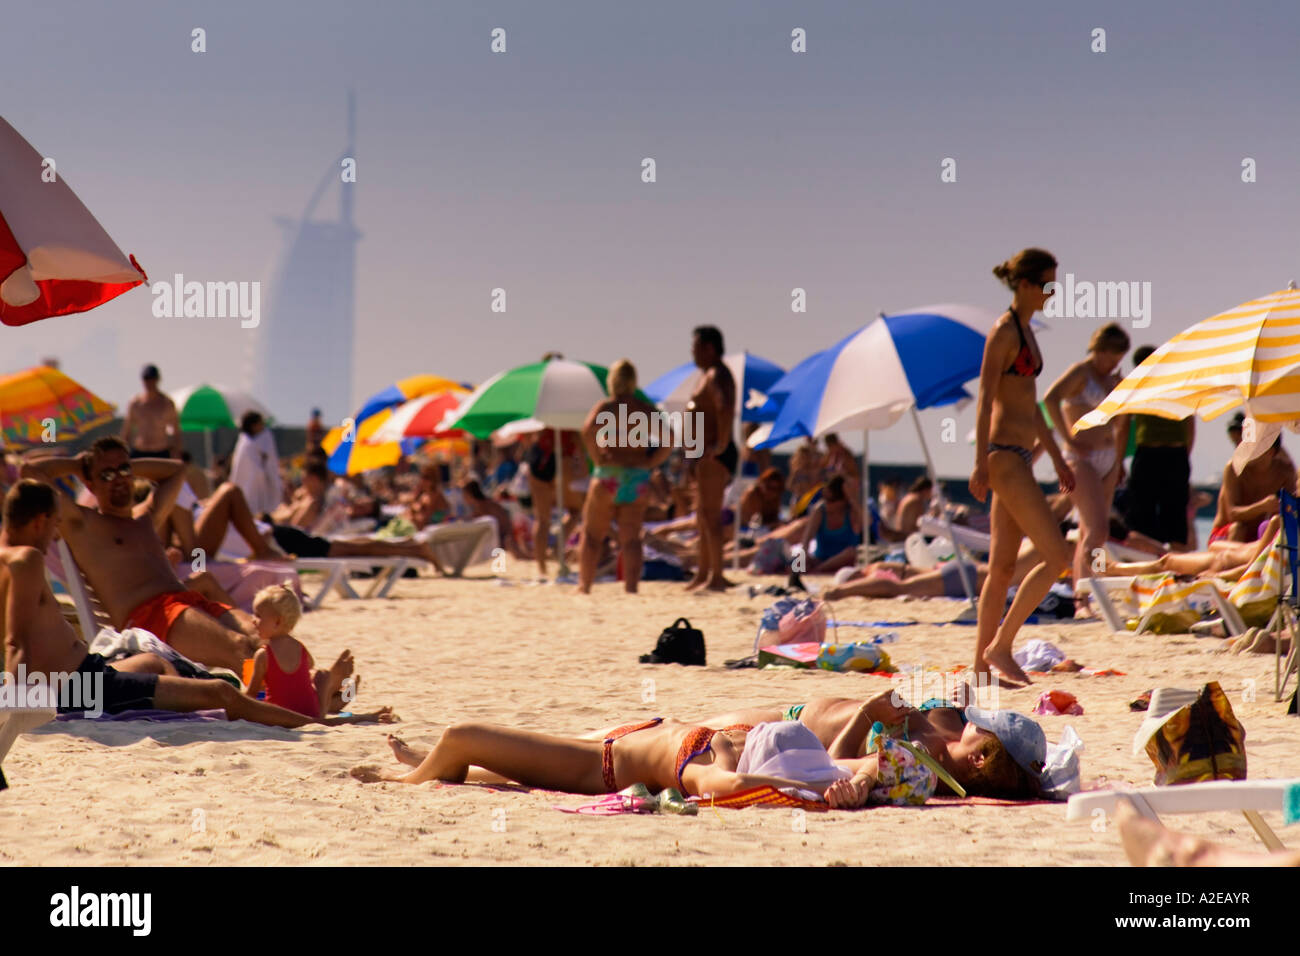 Dubai Jumeirah beach park Burj al Arab in the background Stock Photo